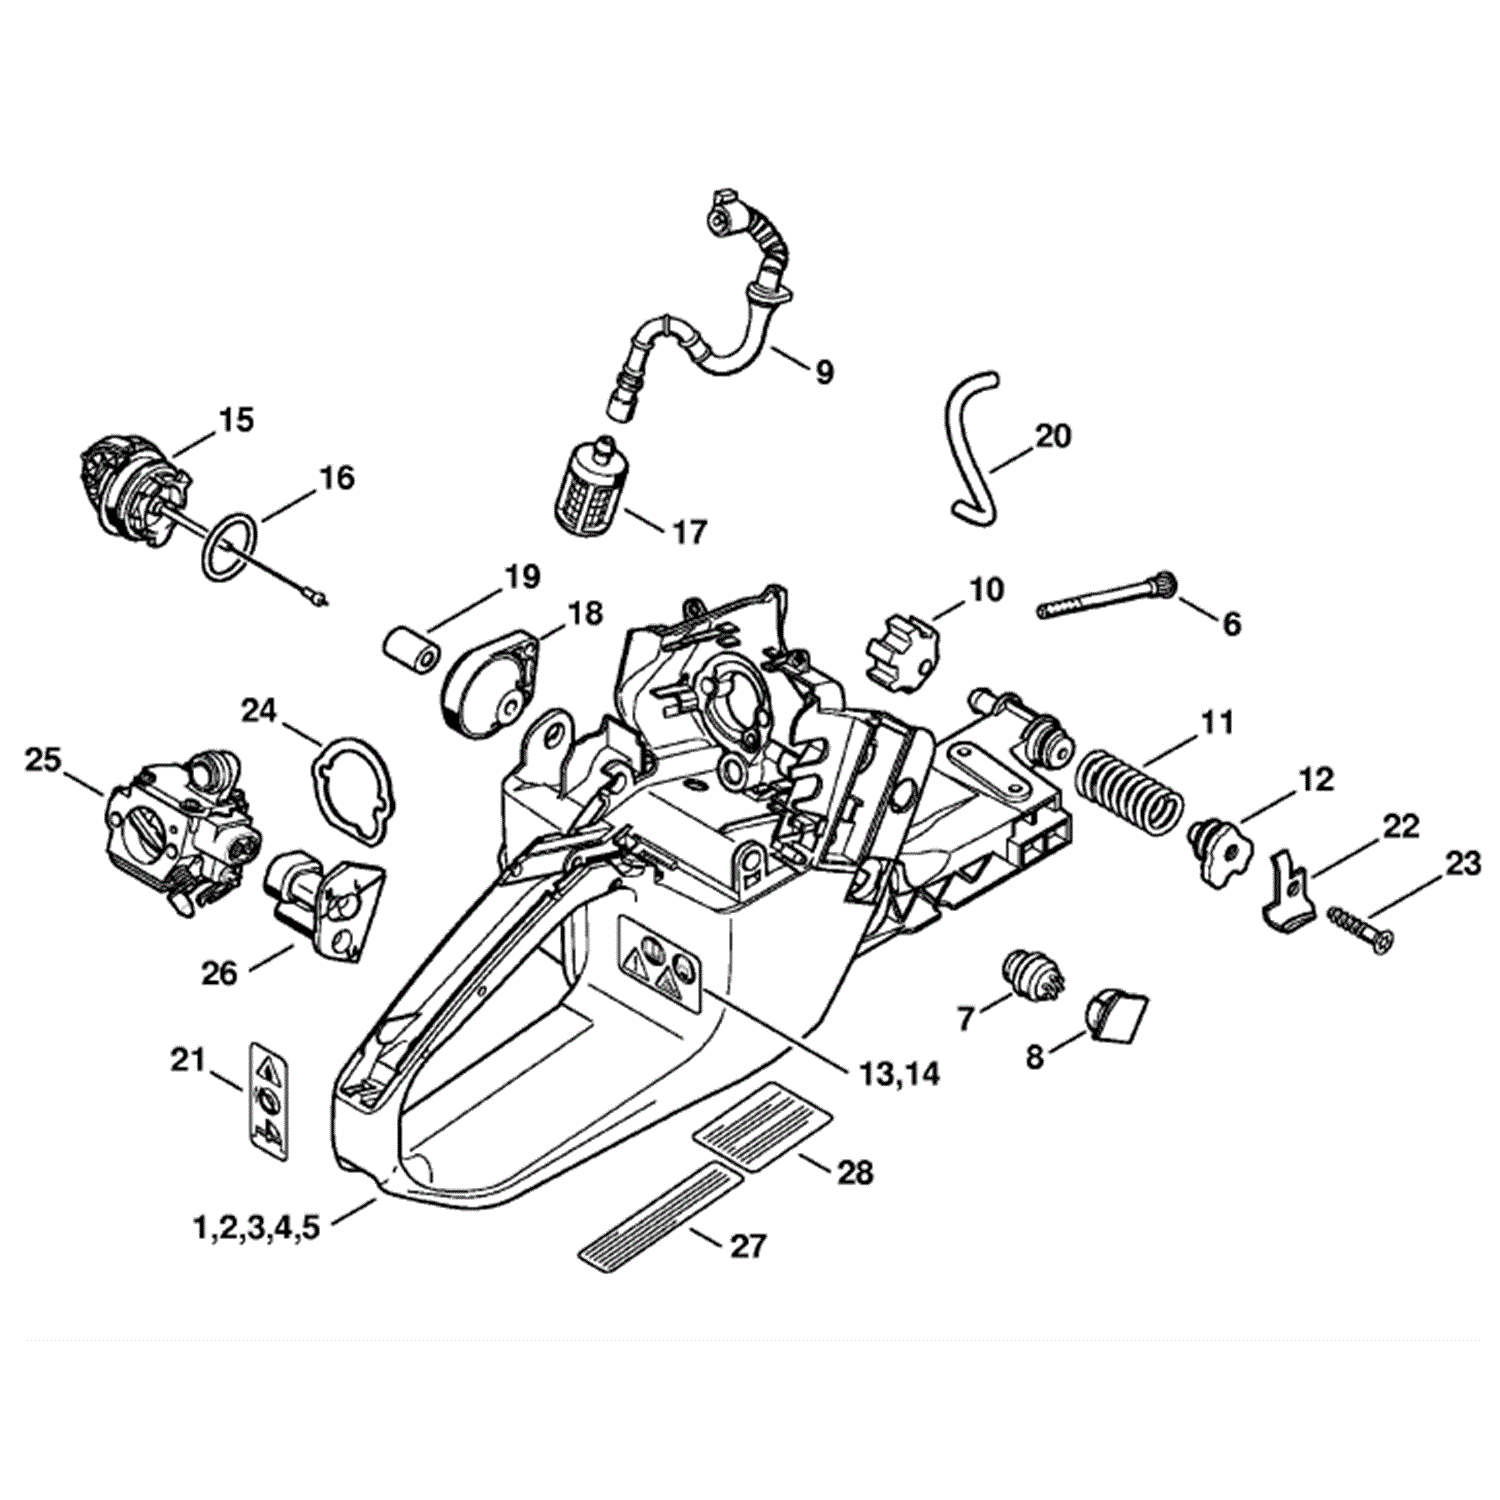 Stihl MS 361 Chainsaw (MS361 C-Q) Parts Diagram, Tank housing